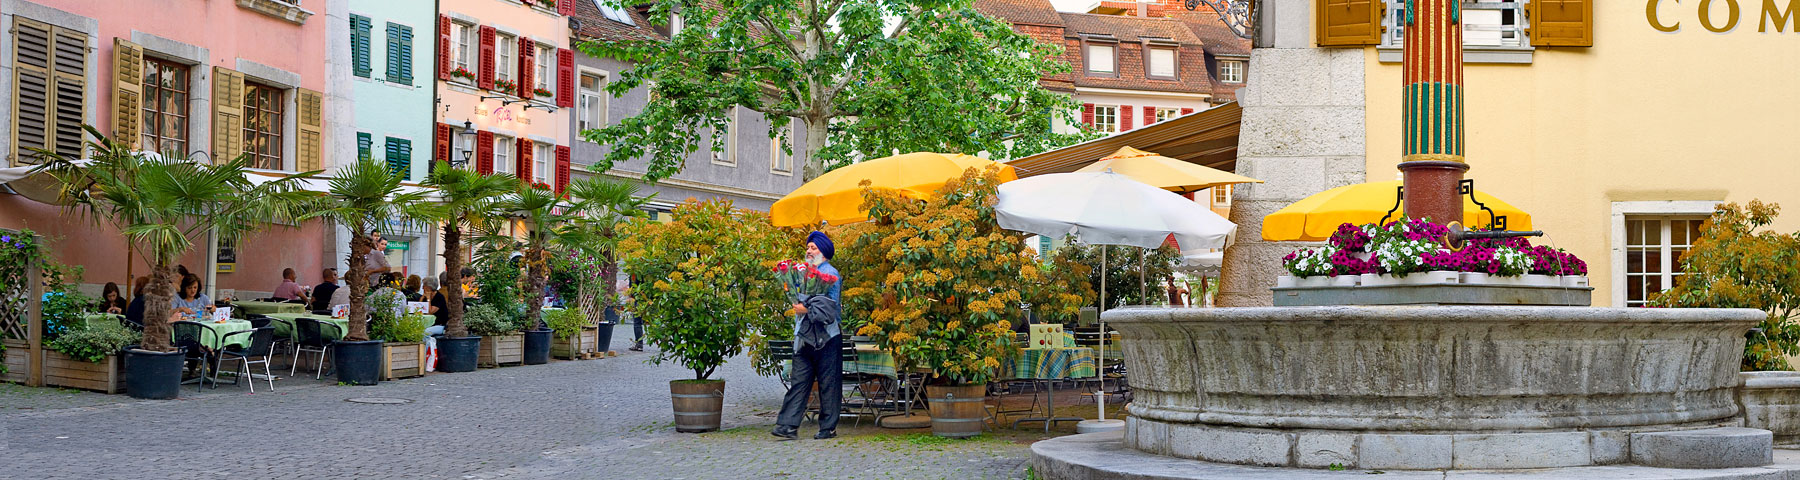 "savoir vivre" in Solothurn